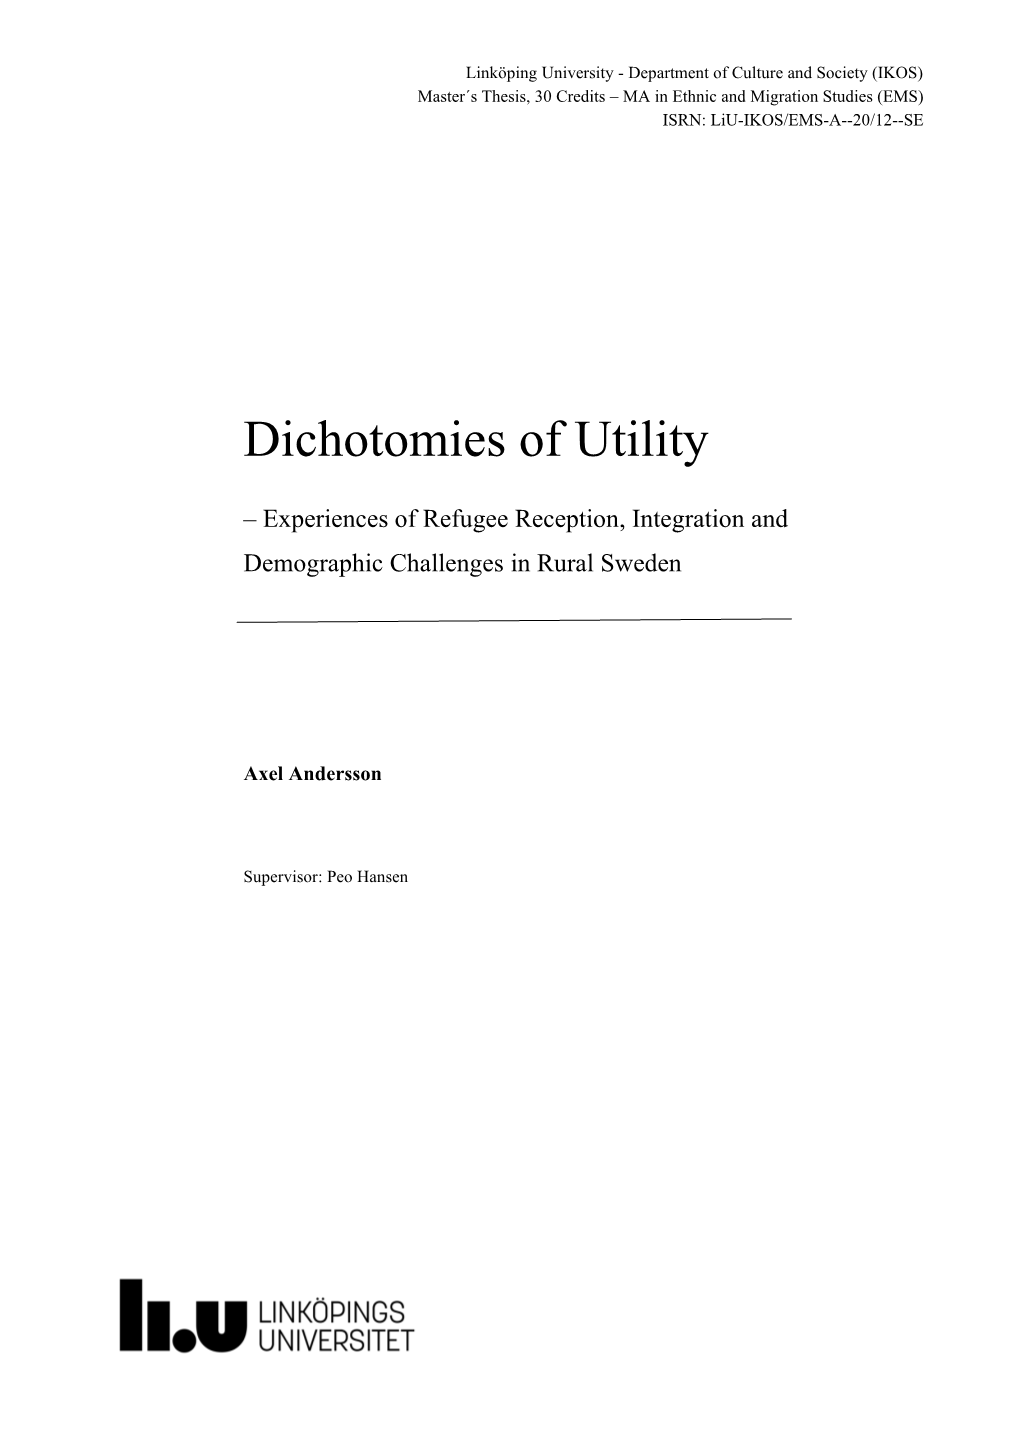 Dichotomies of Utility